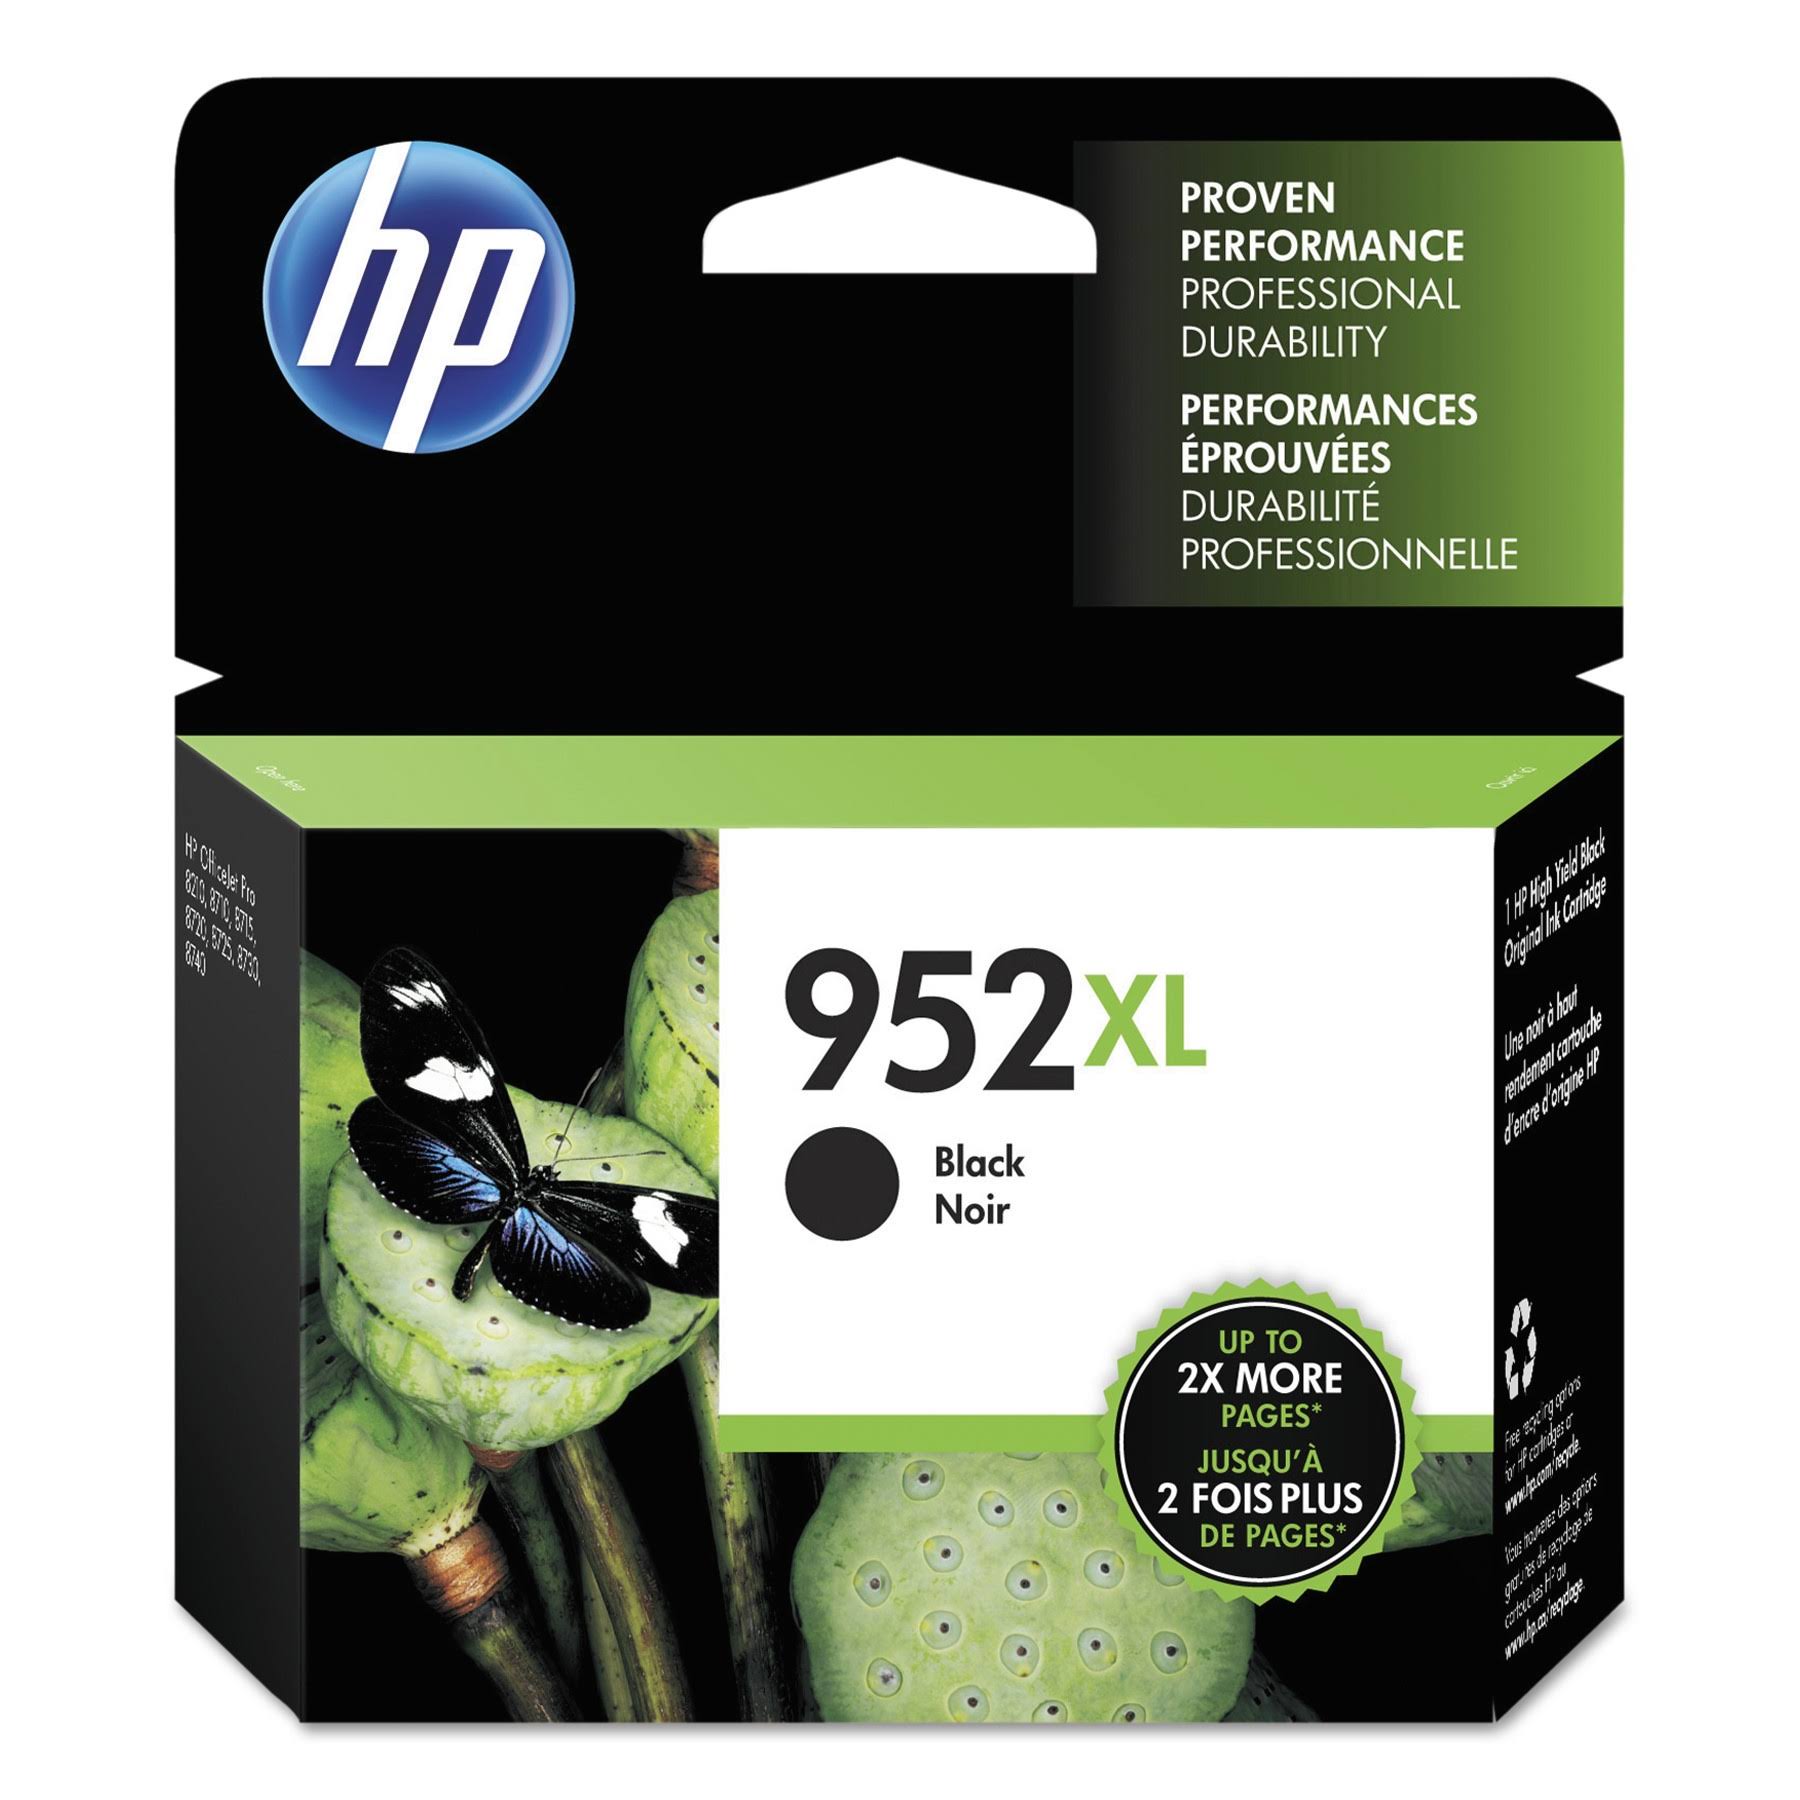 HP 952xl Ink Cartridge - Black, High Yield